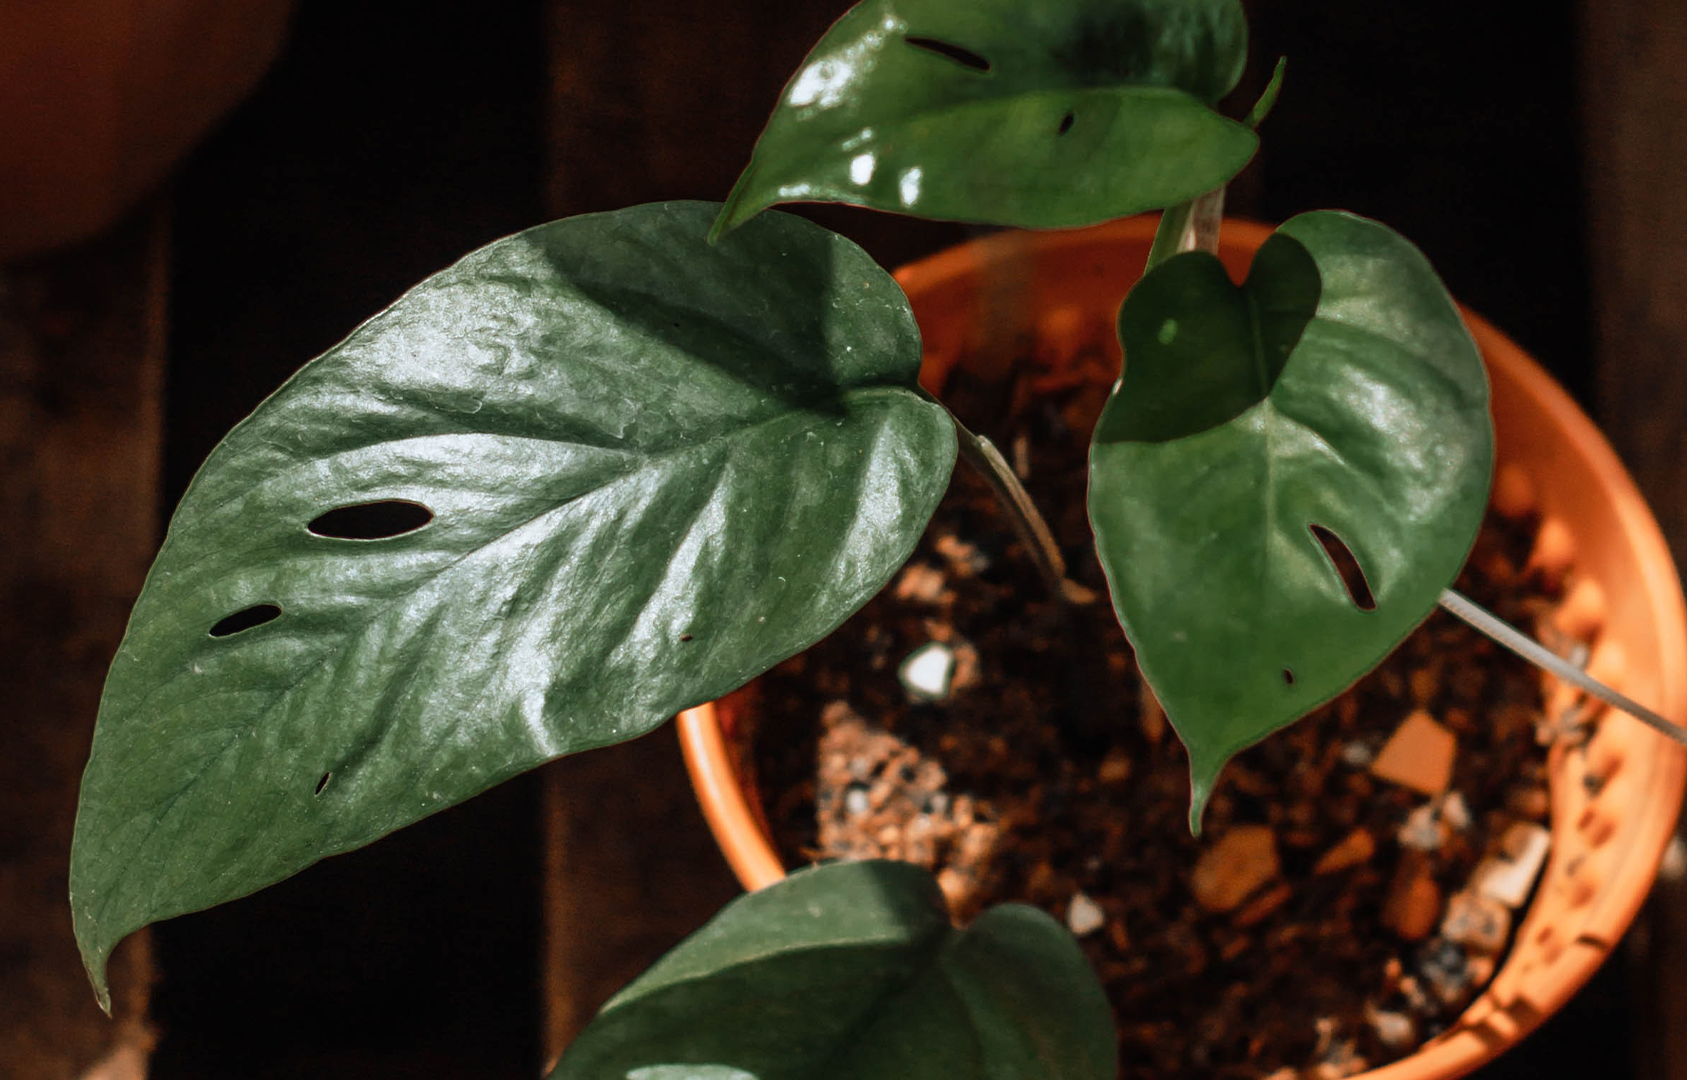 How-to-propagate-indoor-plants